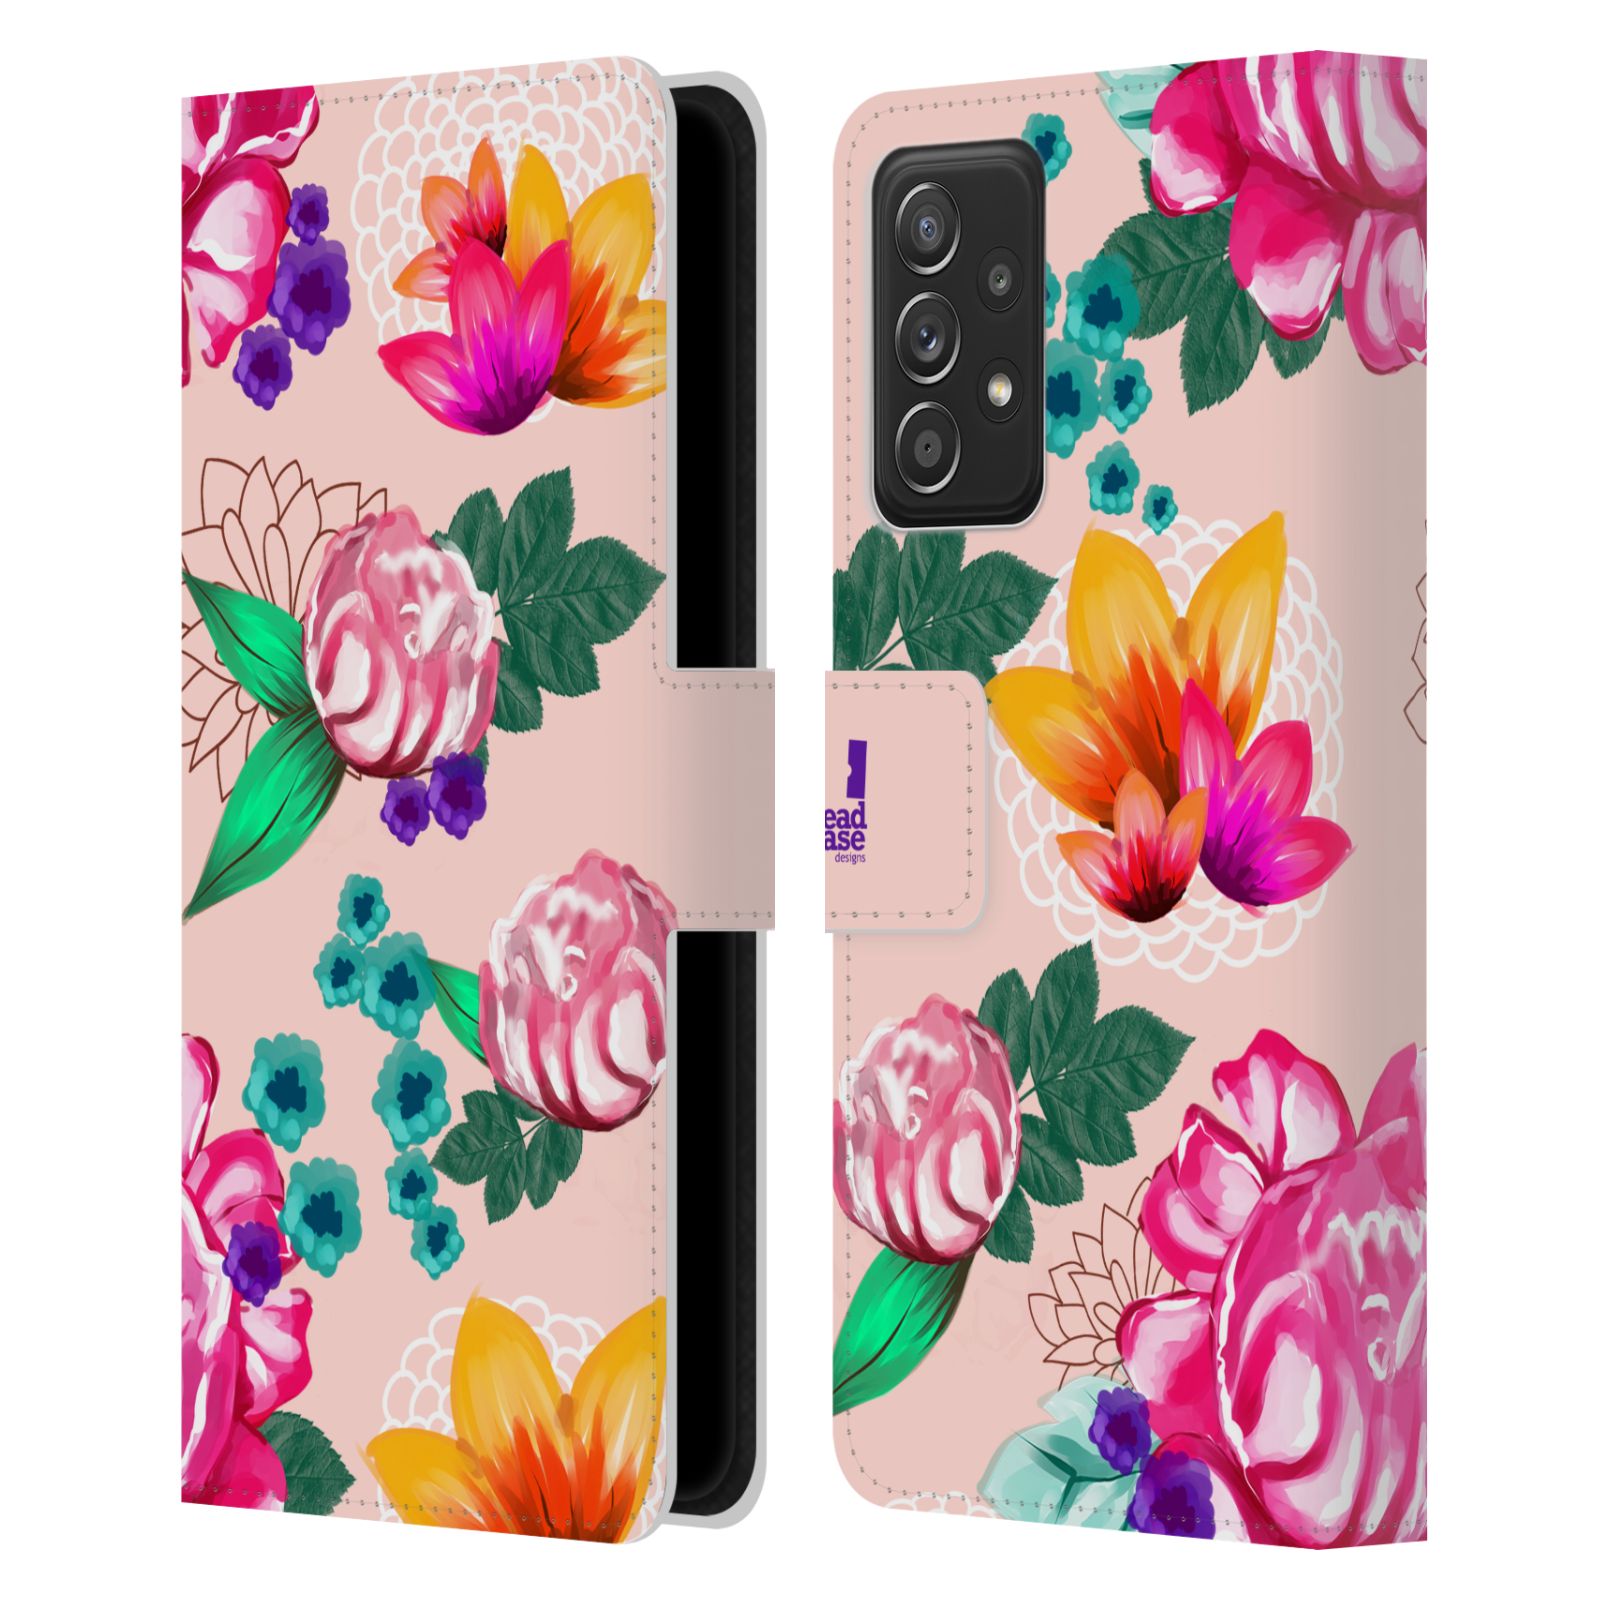 Pouzdro HEAD CASE na mobil Samsung Galaxy A52 / A52 5G / A52s 5G barevné kreslené květiny růžová